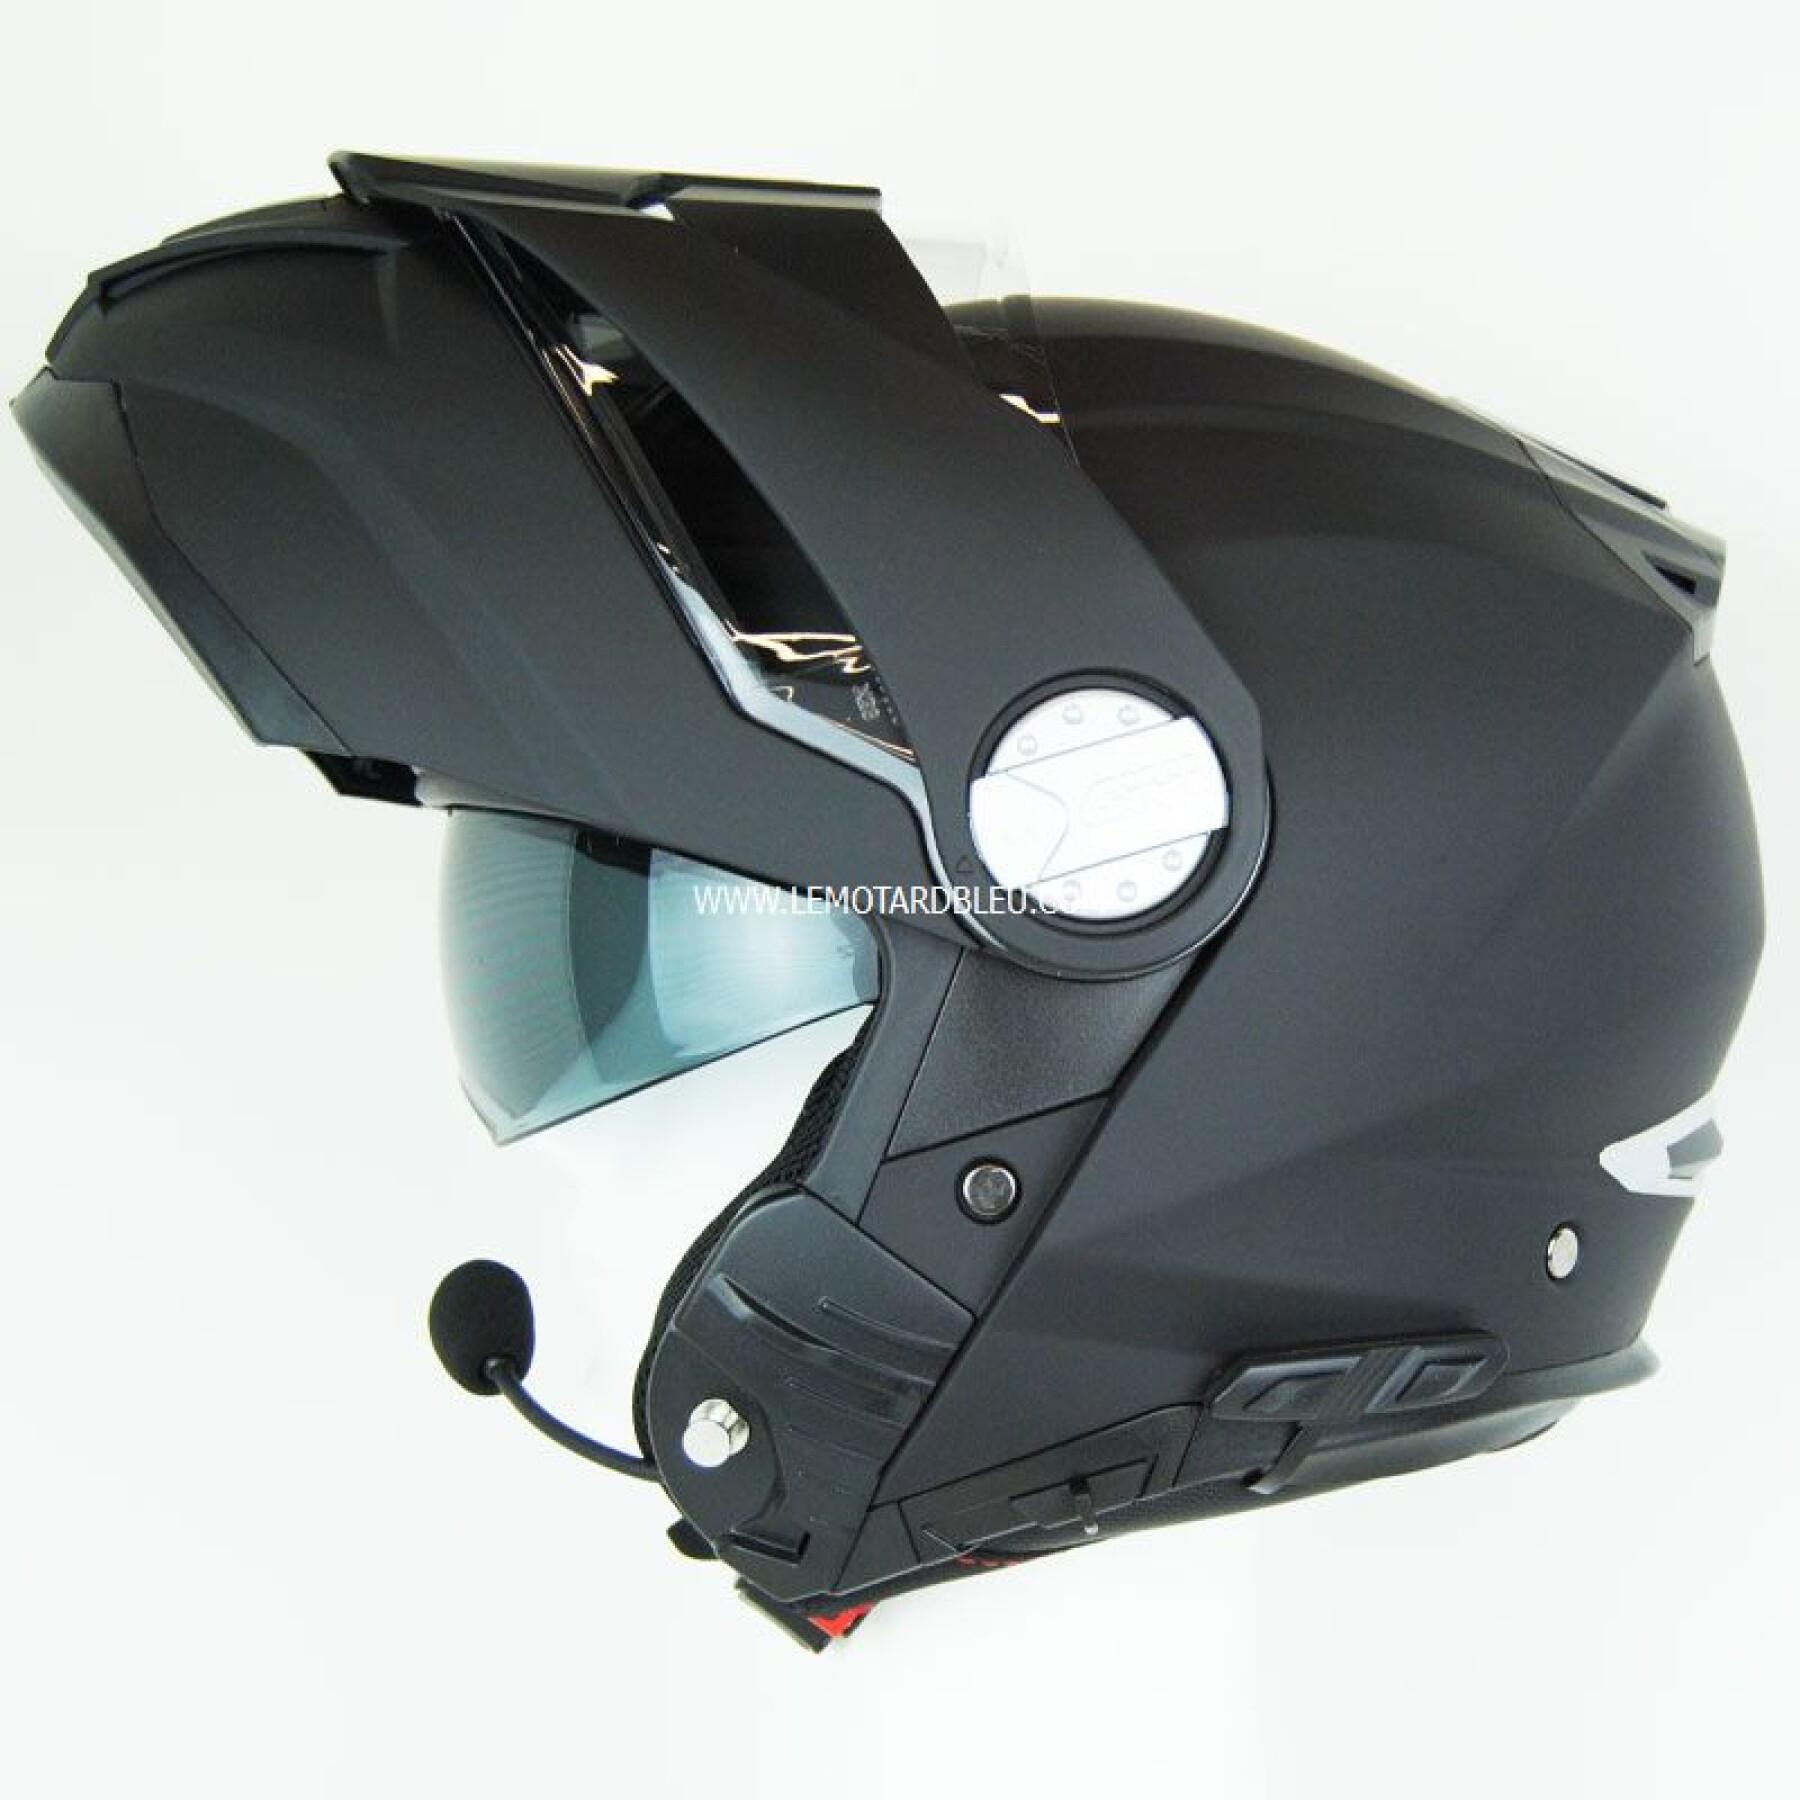 Modular helmet Givi X33 CANYON